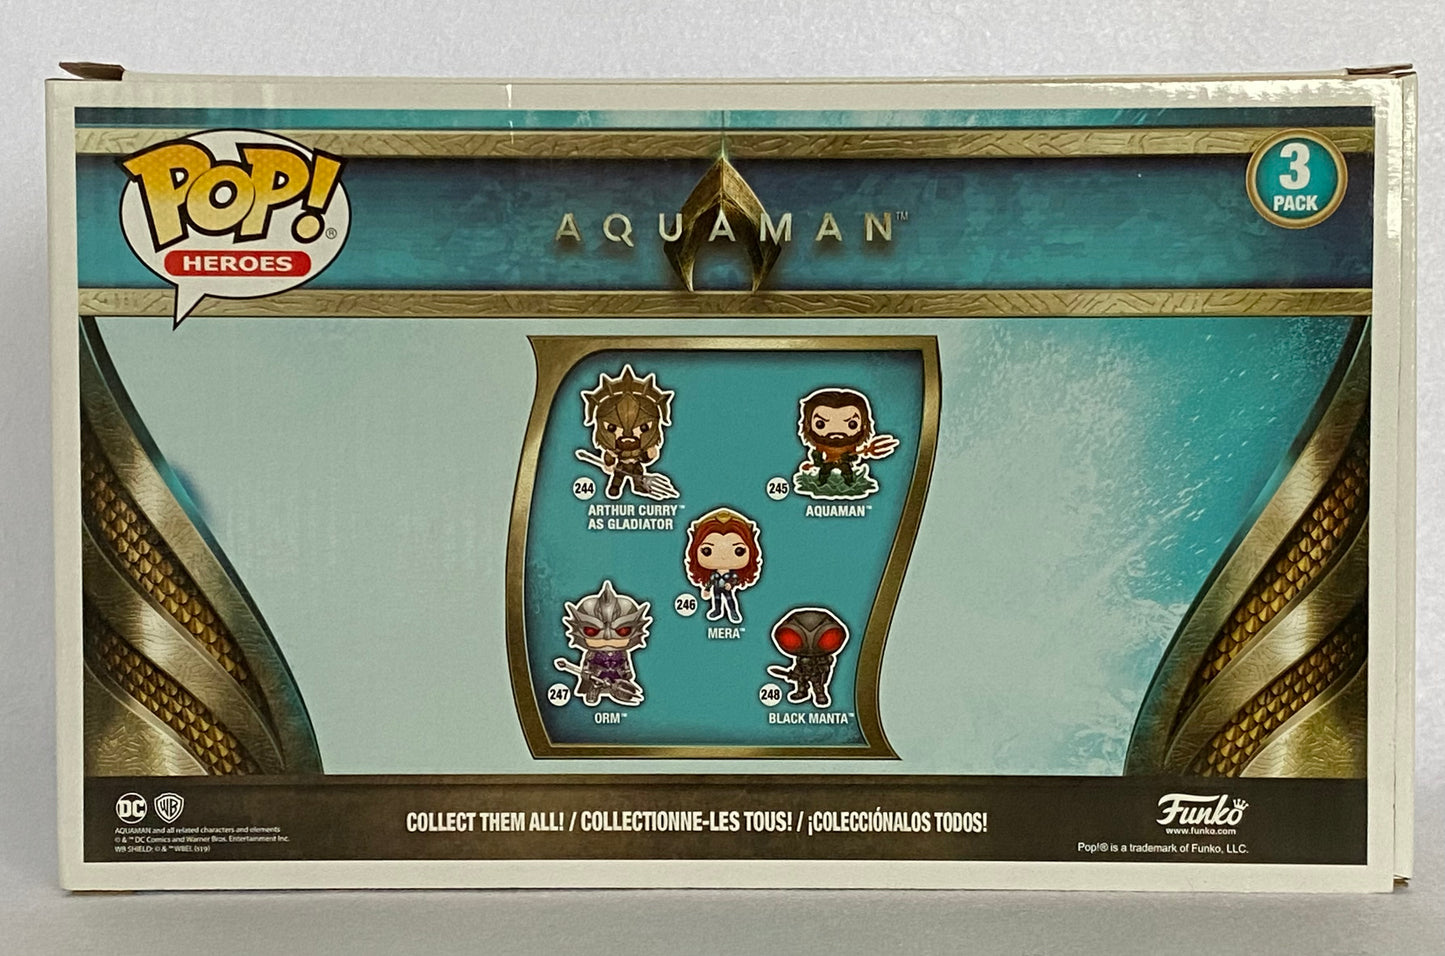 Collectable POP Figures Arthur Curry In Hero Suit Box Trio Set - Aquaman